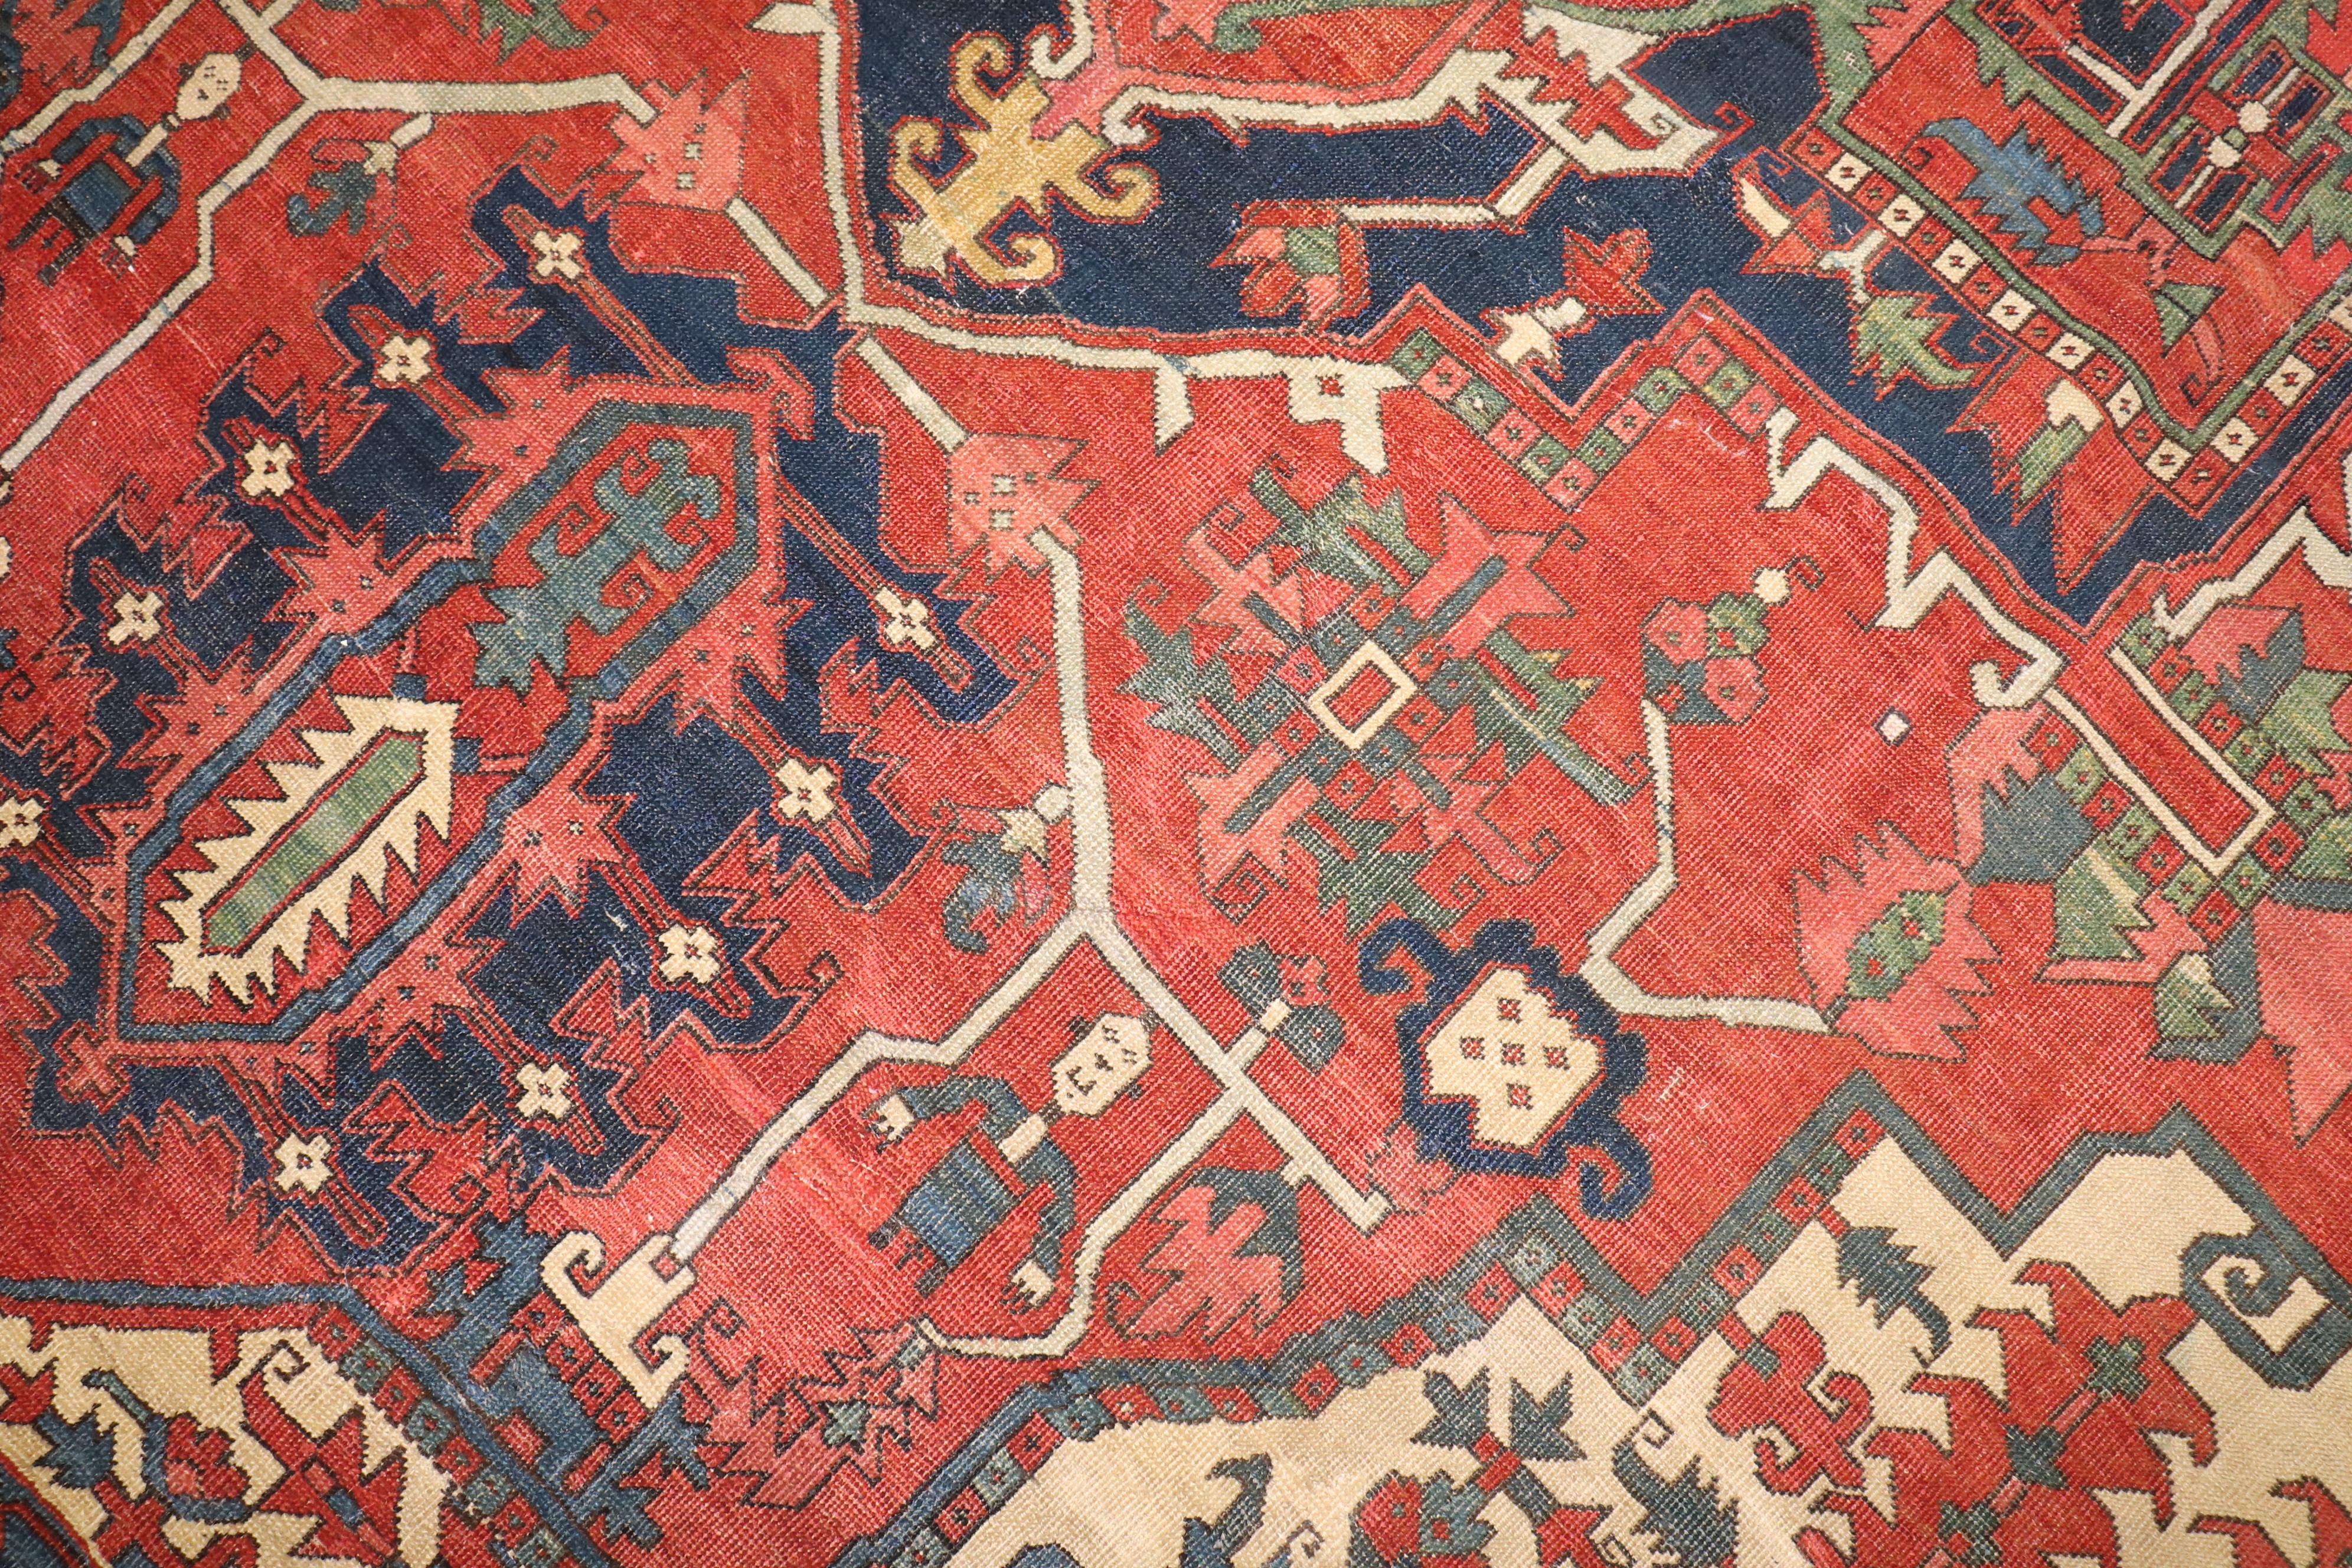 Zabihi Collection Pictorial Animal Figure Antique Persian Serapi Carpet For Sale 8